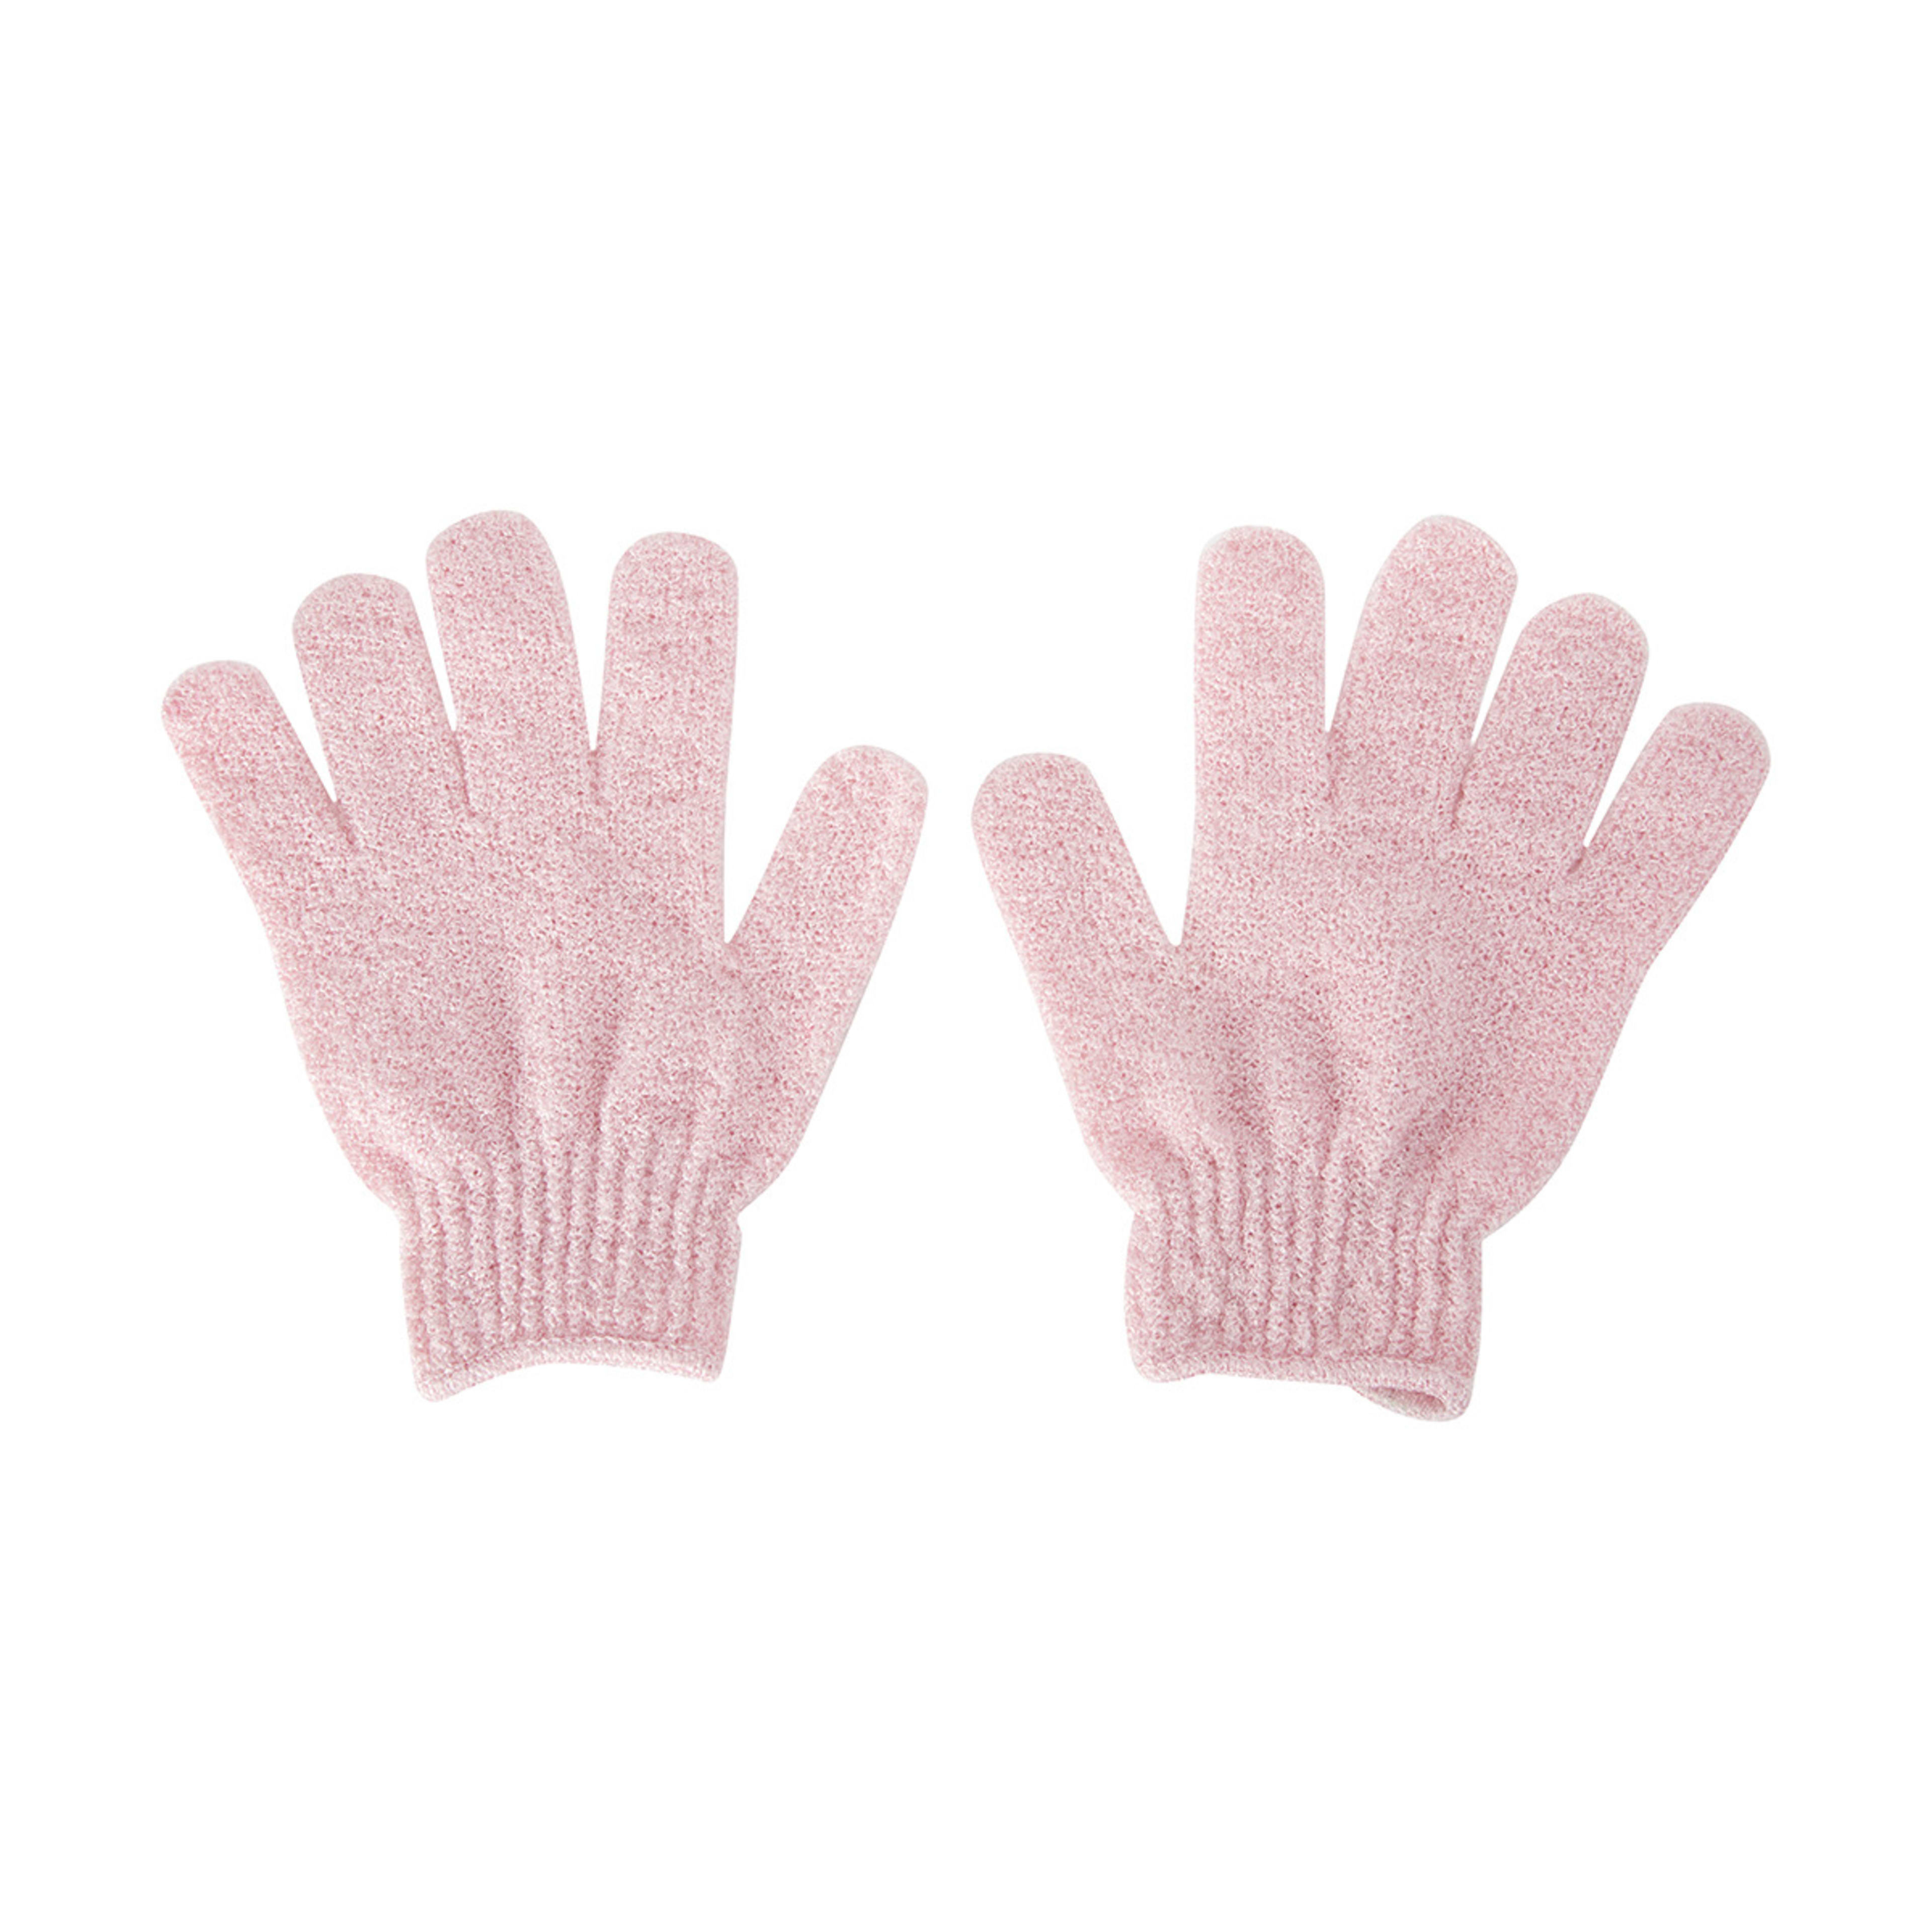 Exfoliating Gloves - Pink - Kmart